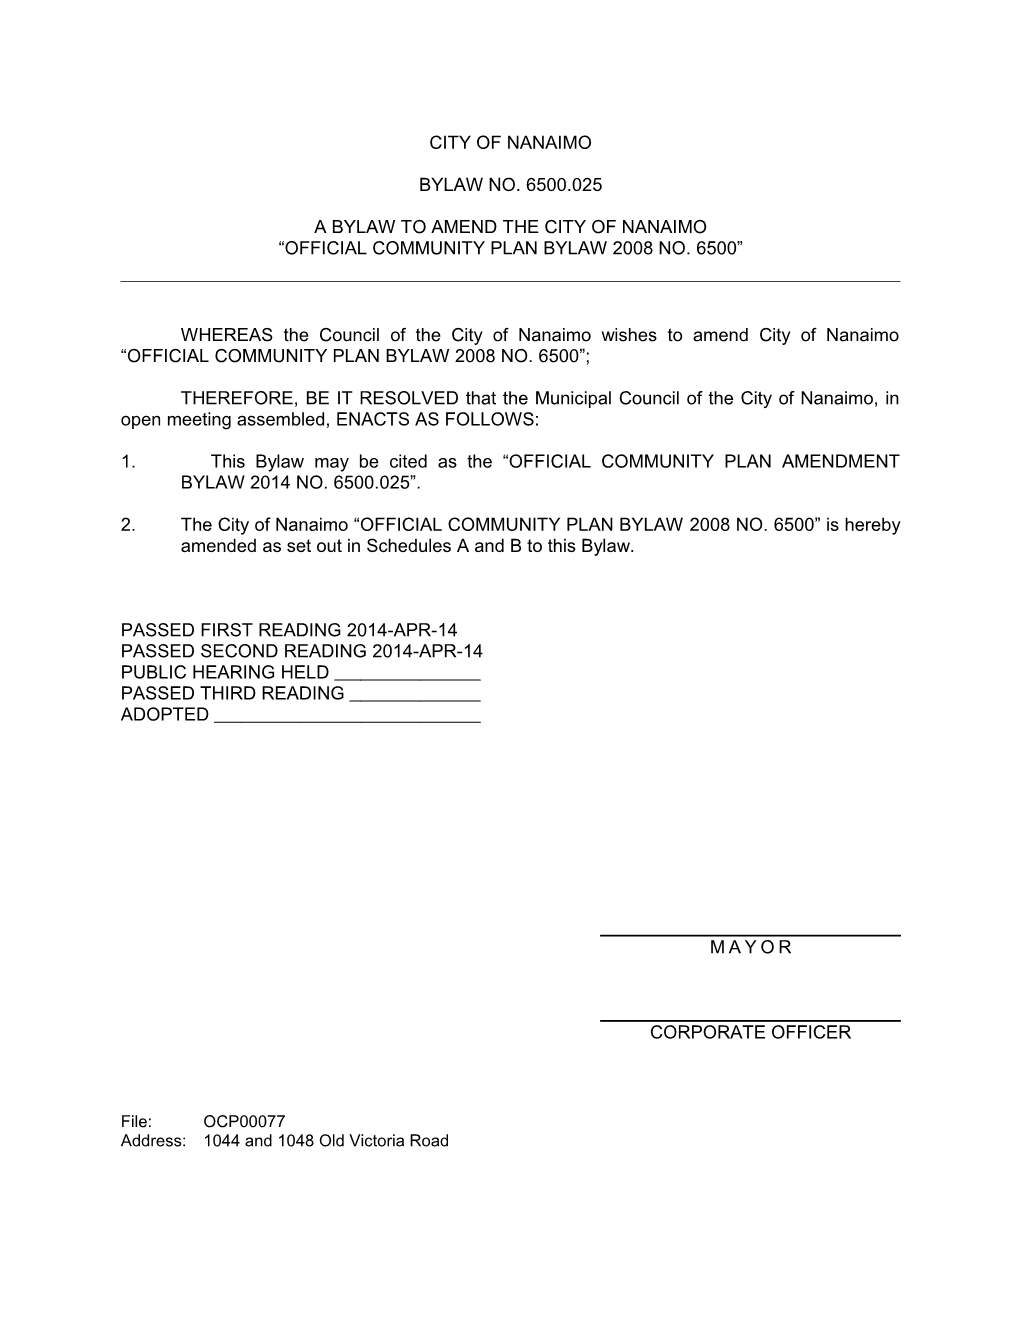 Official Community Plan Amendment Bylaw 2014 No. 6500.025 - OCP77 - 1044 & 1048 Old Victoria